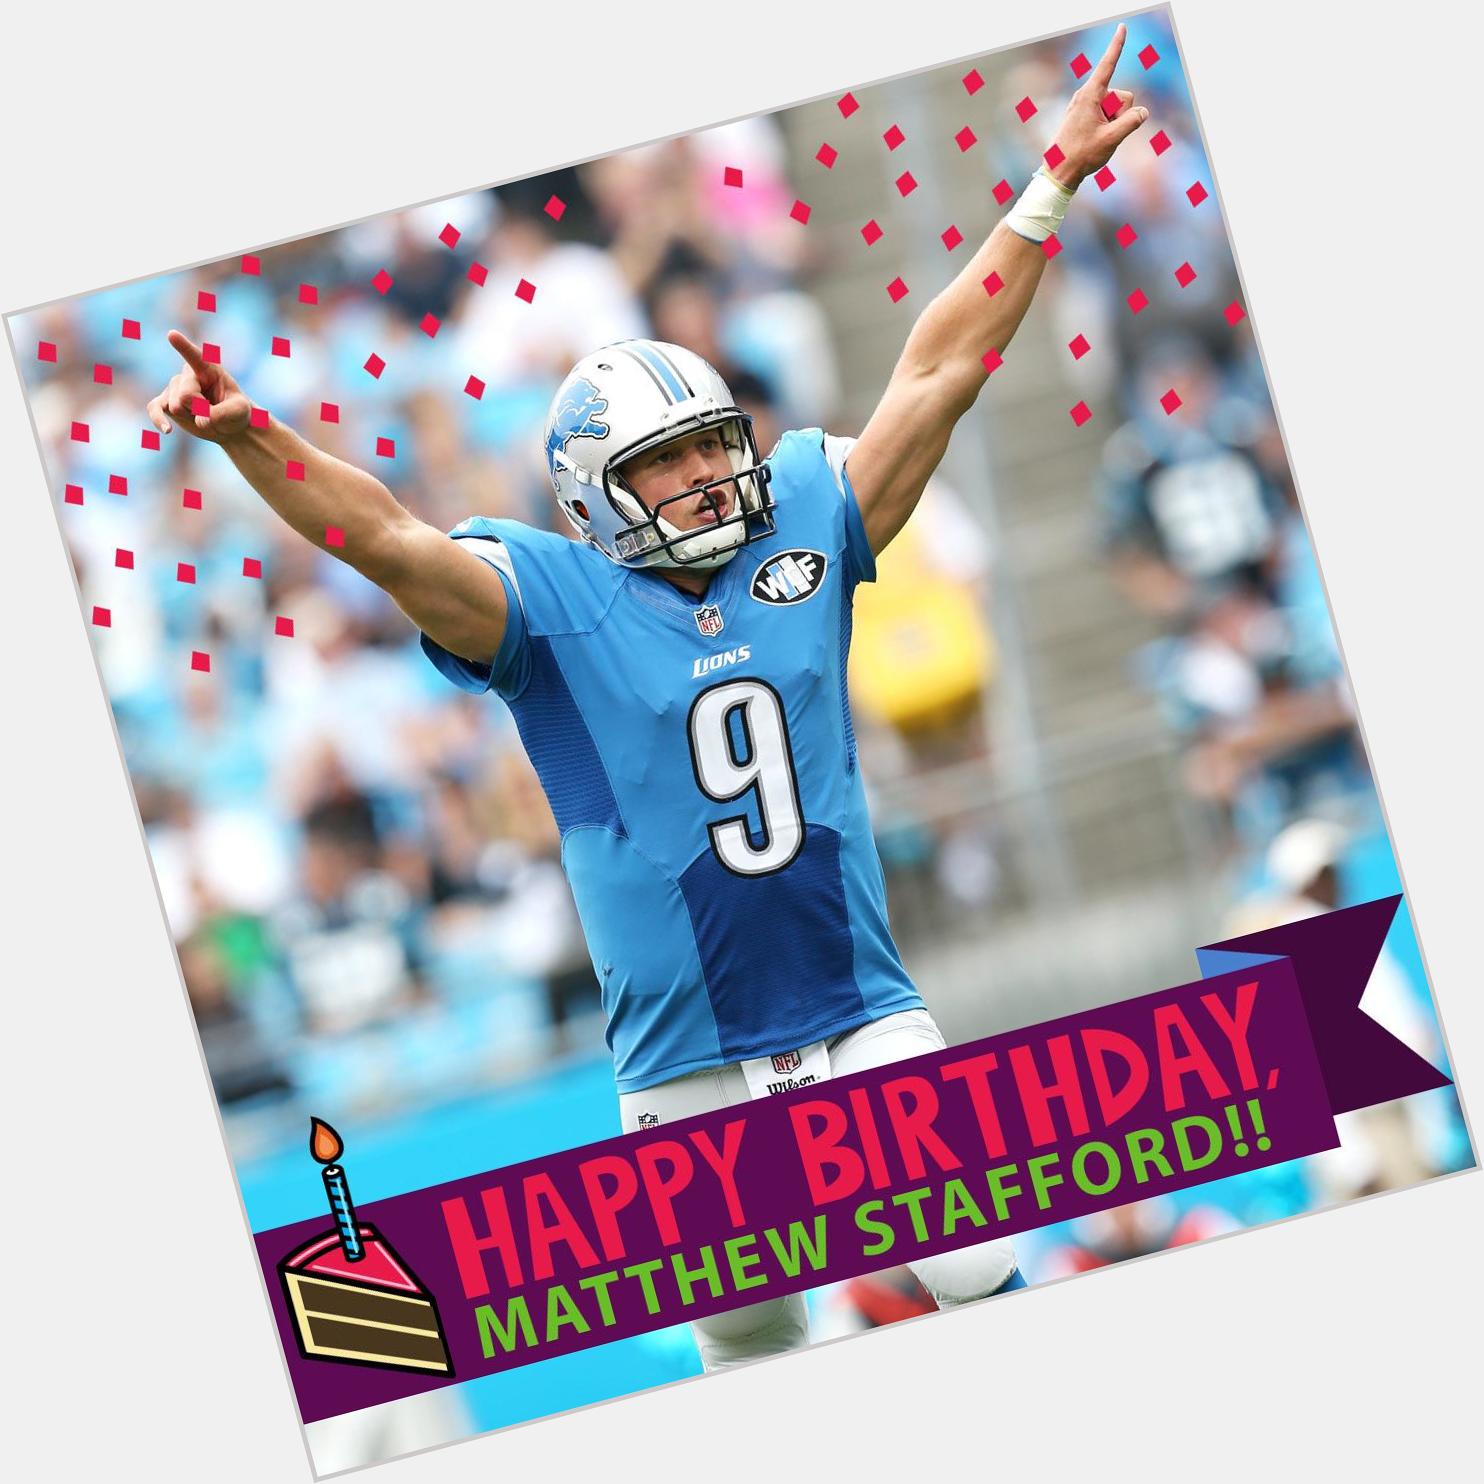 To wish a Happy Birthday to QB Matthew Stafford! 